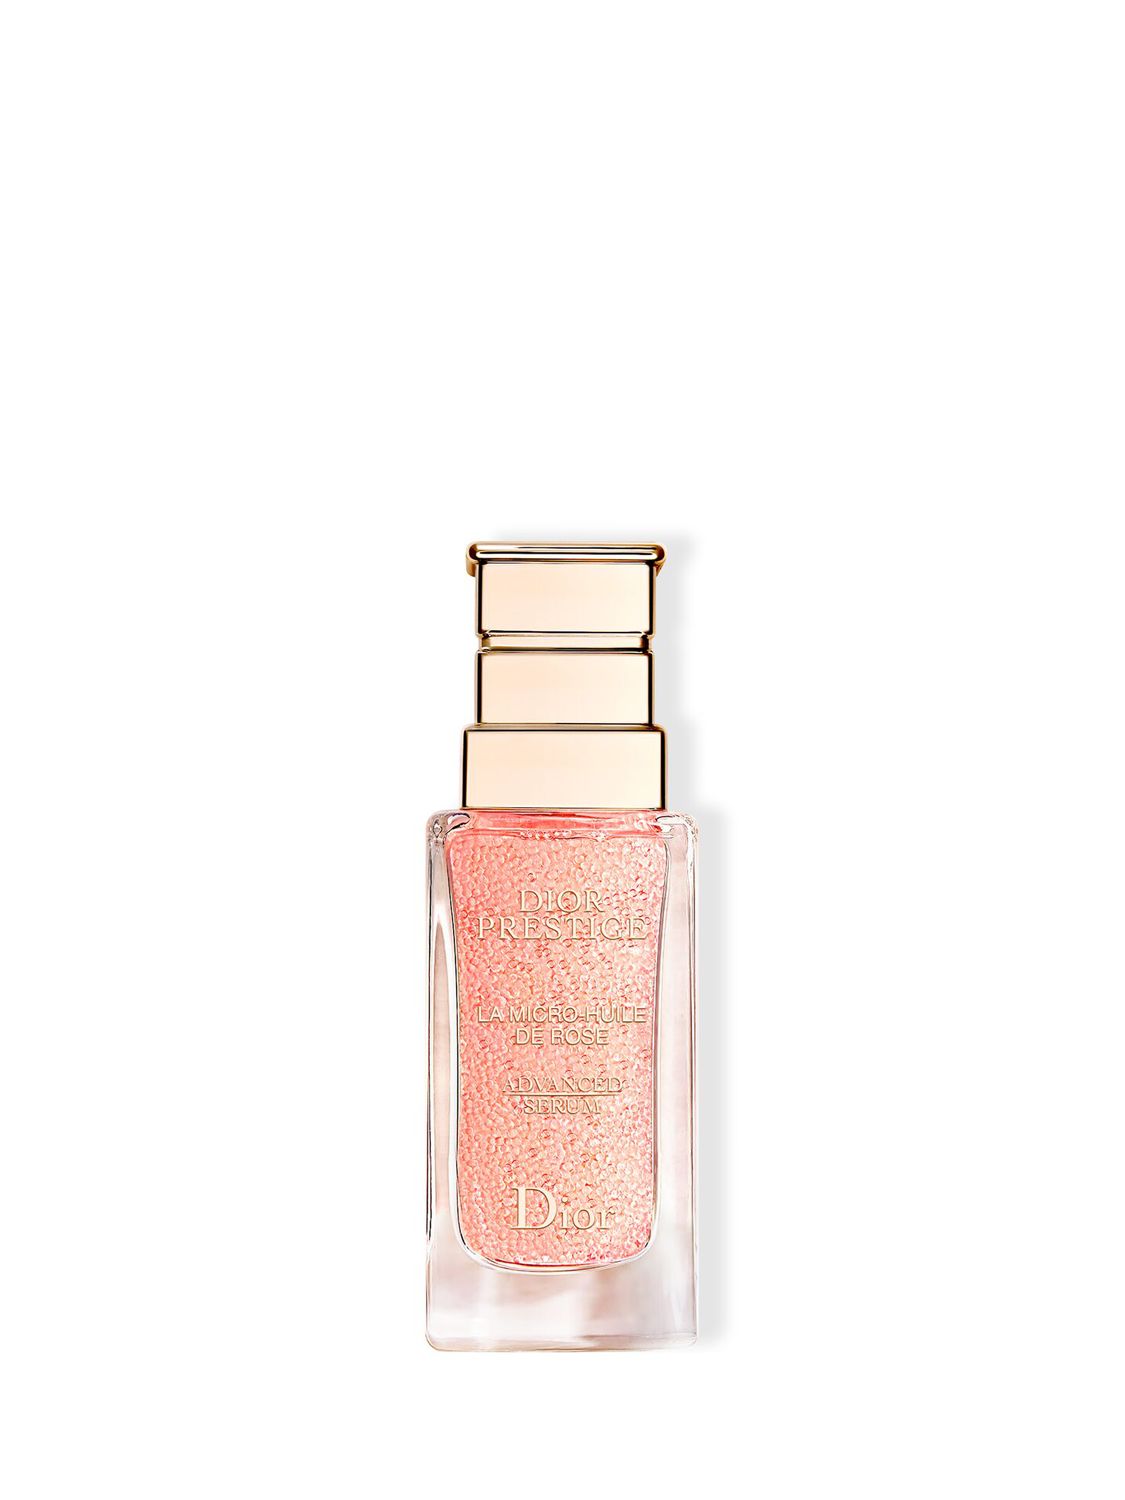 Dior Prestige La Micro-Huile de Rose Advanced Serum, 30ml at John Lewis